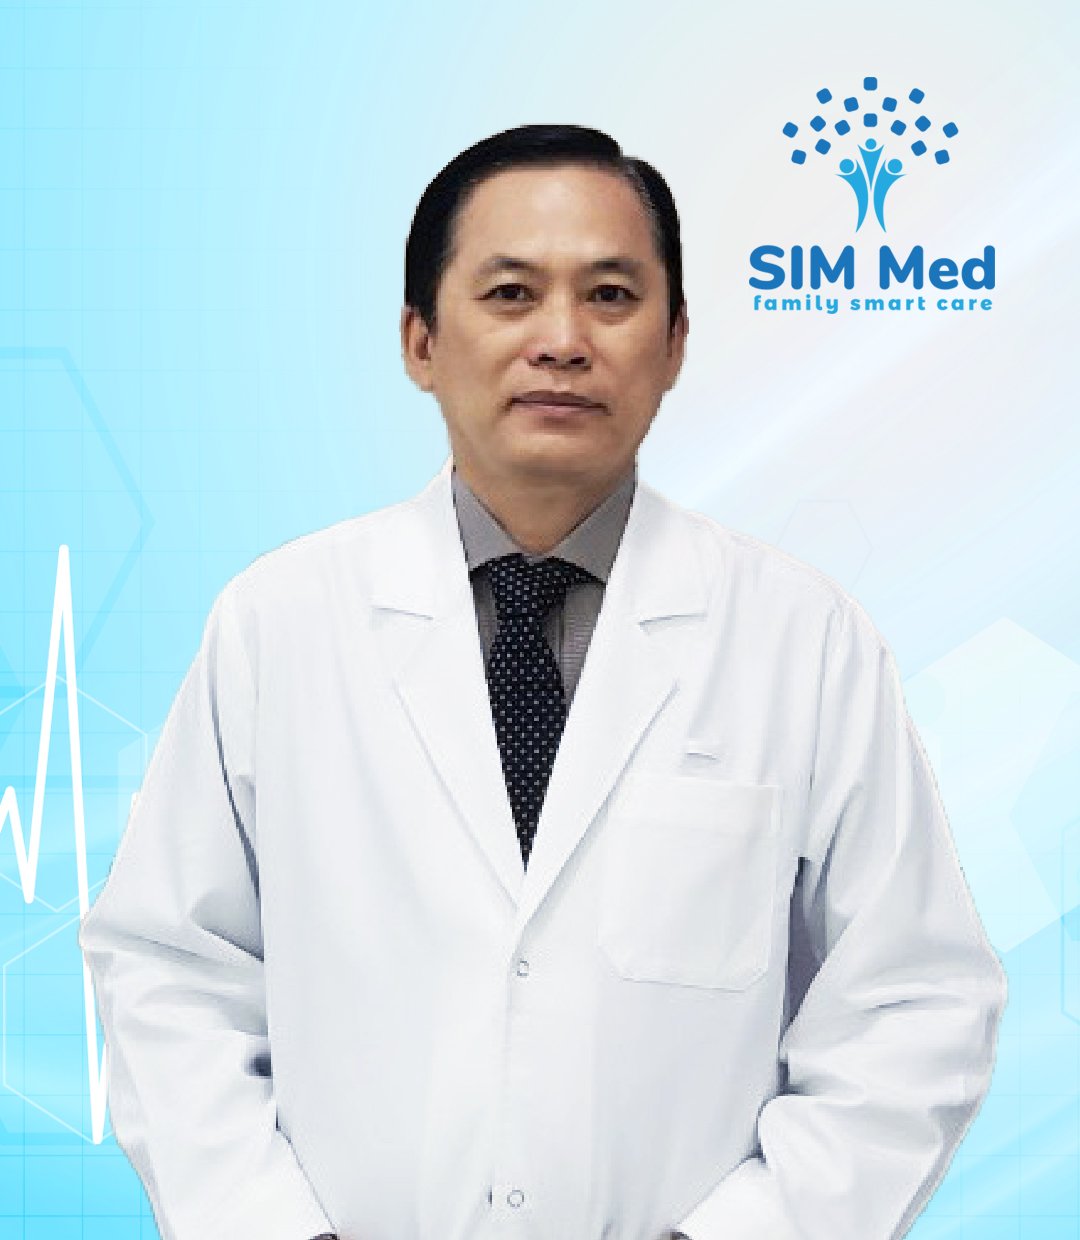 Dr. Le van Khoa